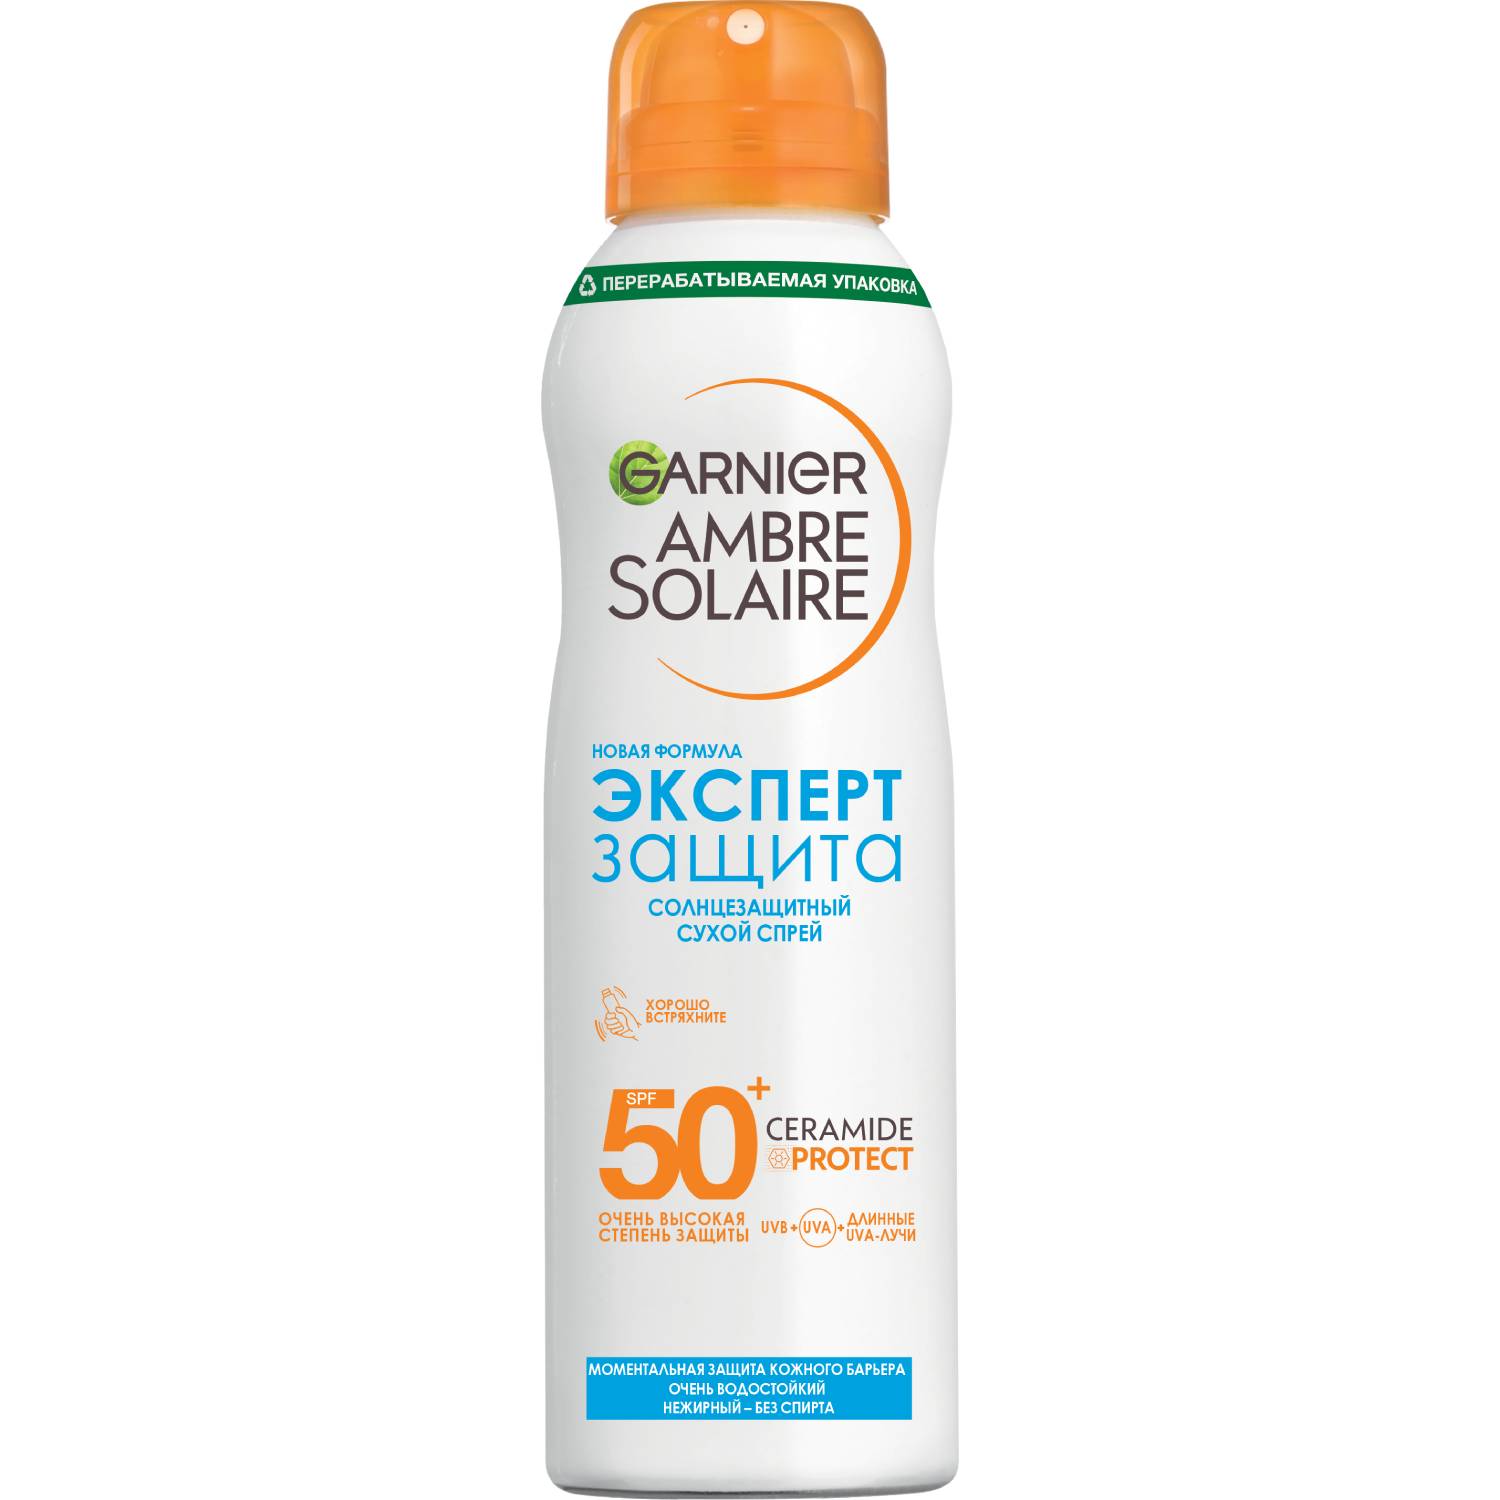 Garnier Солнцезащитный сухой спрей Эксперт защита SPF50+, 150 мл (Garnier, Amber solaire) цена и фото